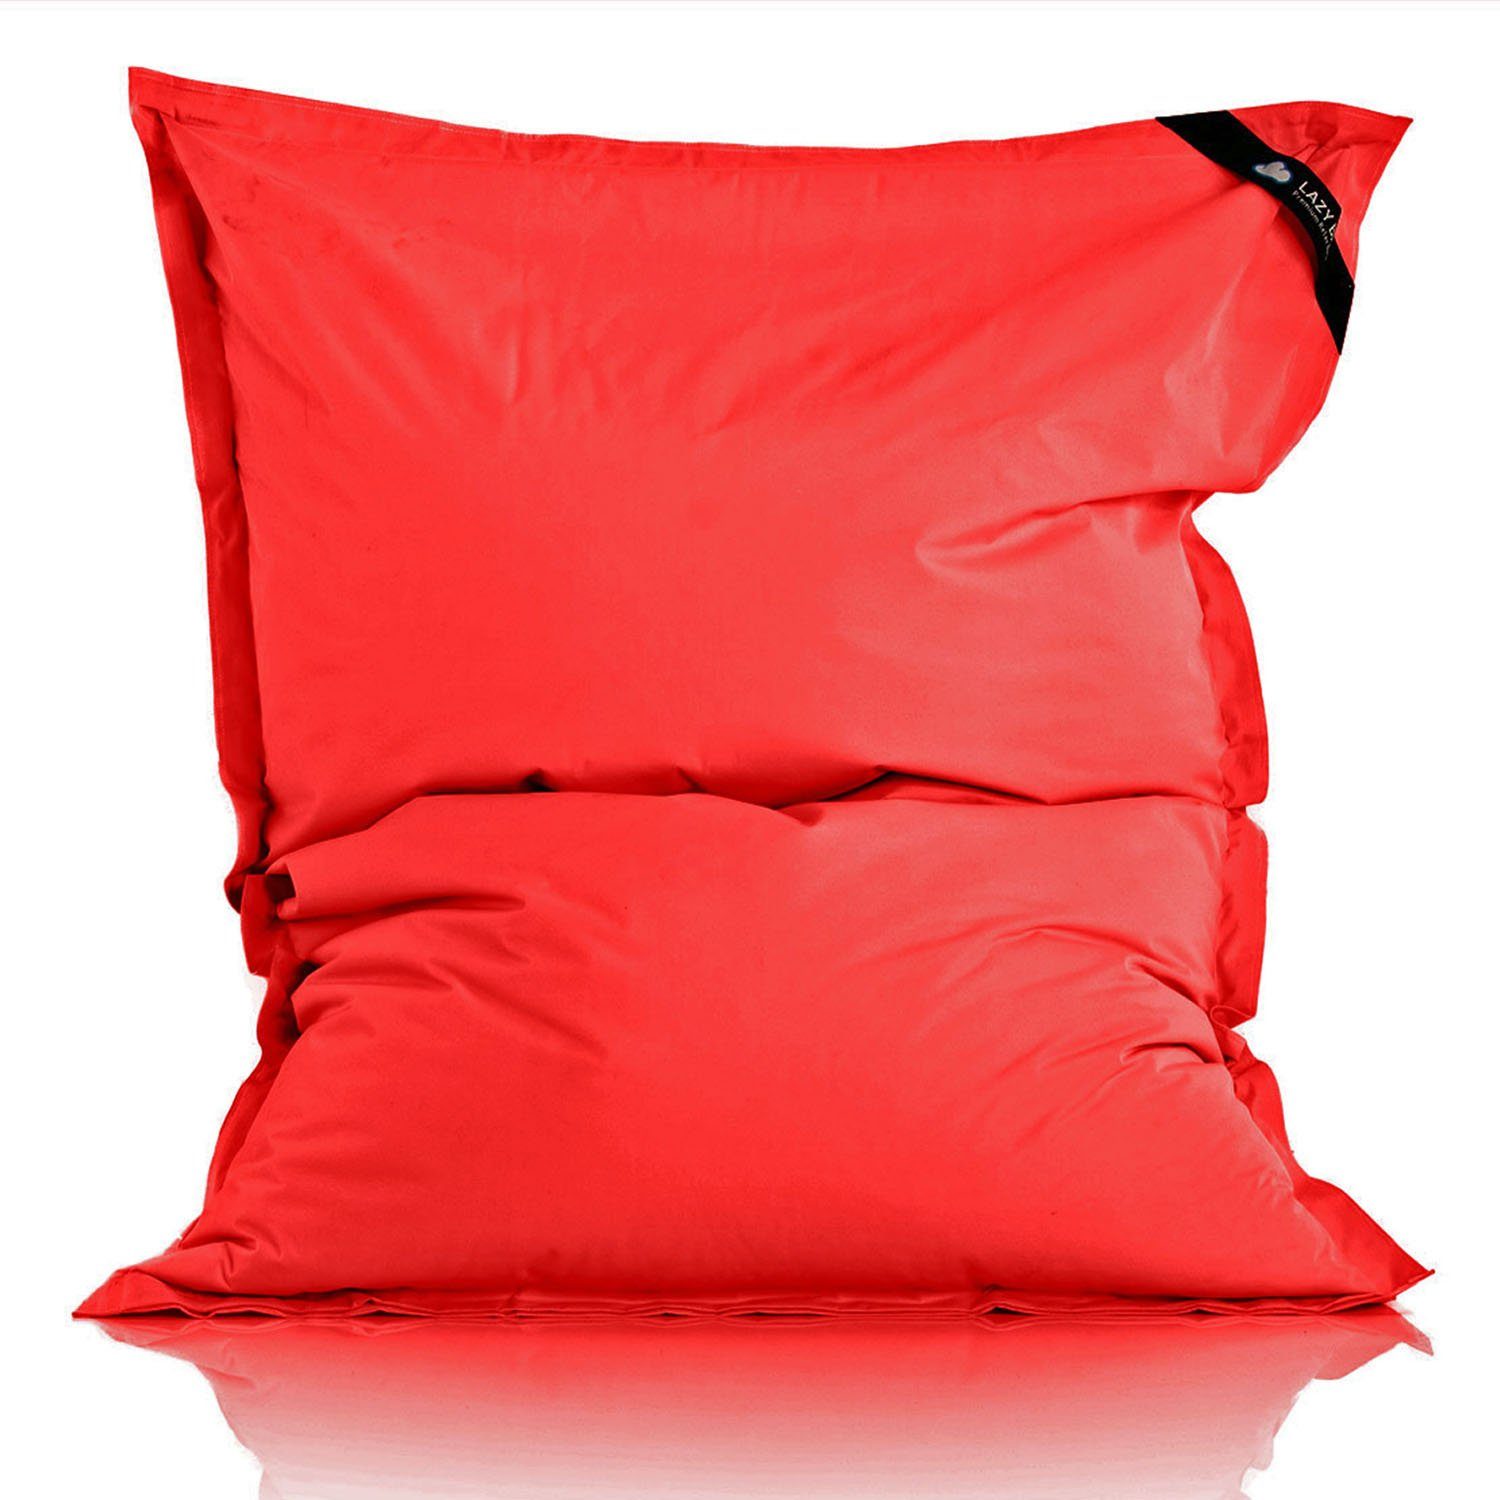 LazyBag Sitzsack Original Indoor & Outdoor Bean-Bag (XL 250 Liter, Riesensitzsack), Junior-Sitzkissen Sessel Rot